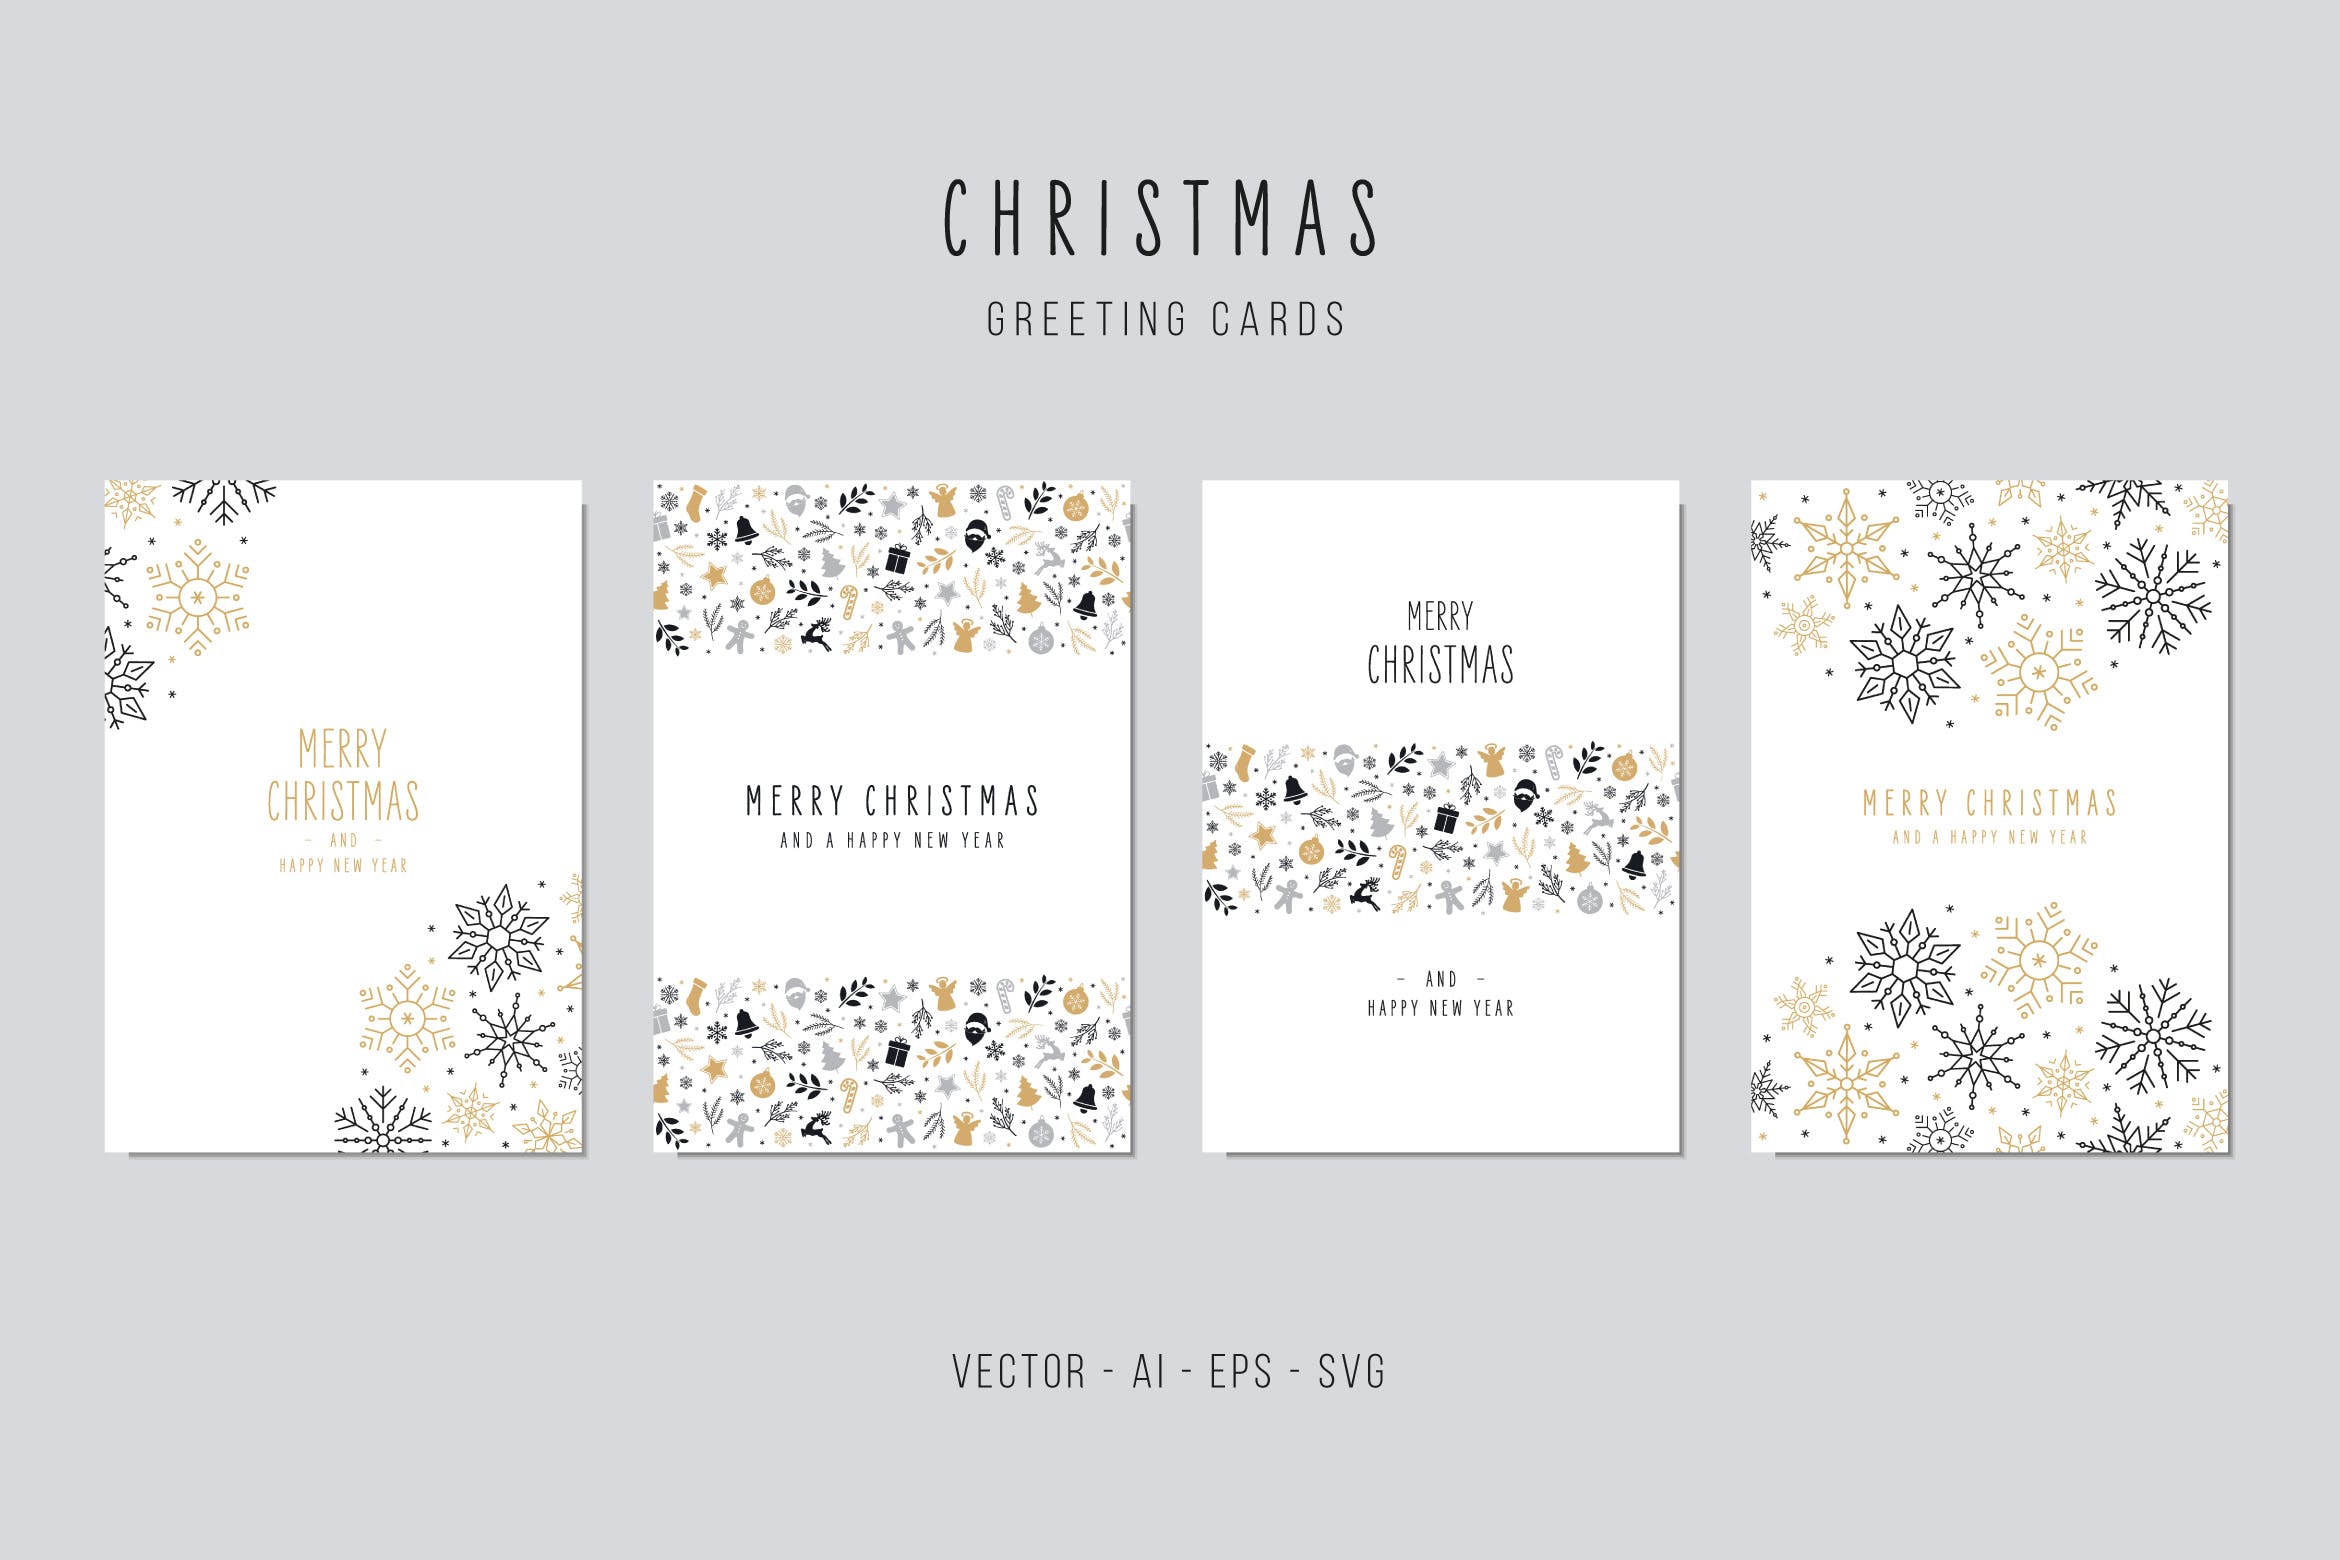 创意雪花手绘圣诞节贺卡矢量设计模板集v3 Christmas Greeting Vector Card Set插图